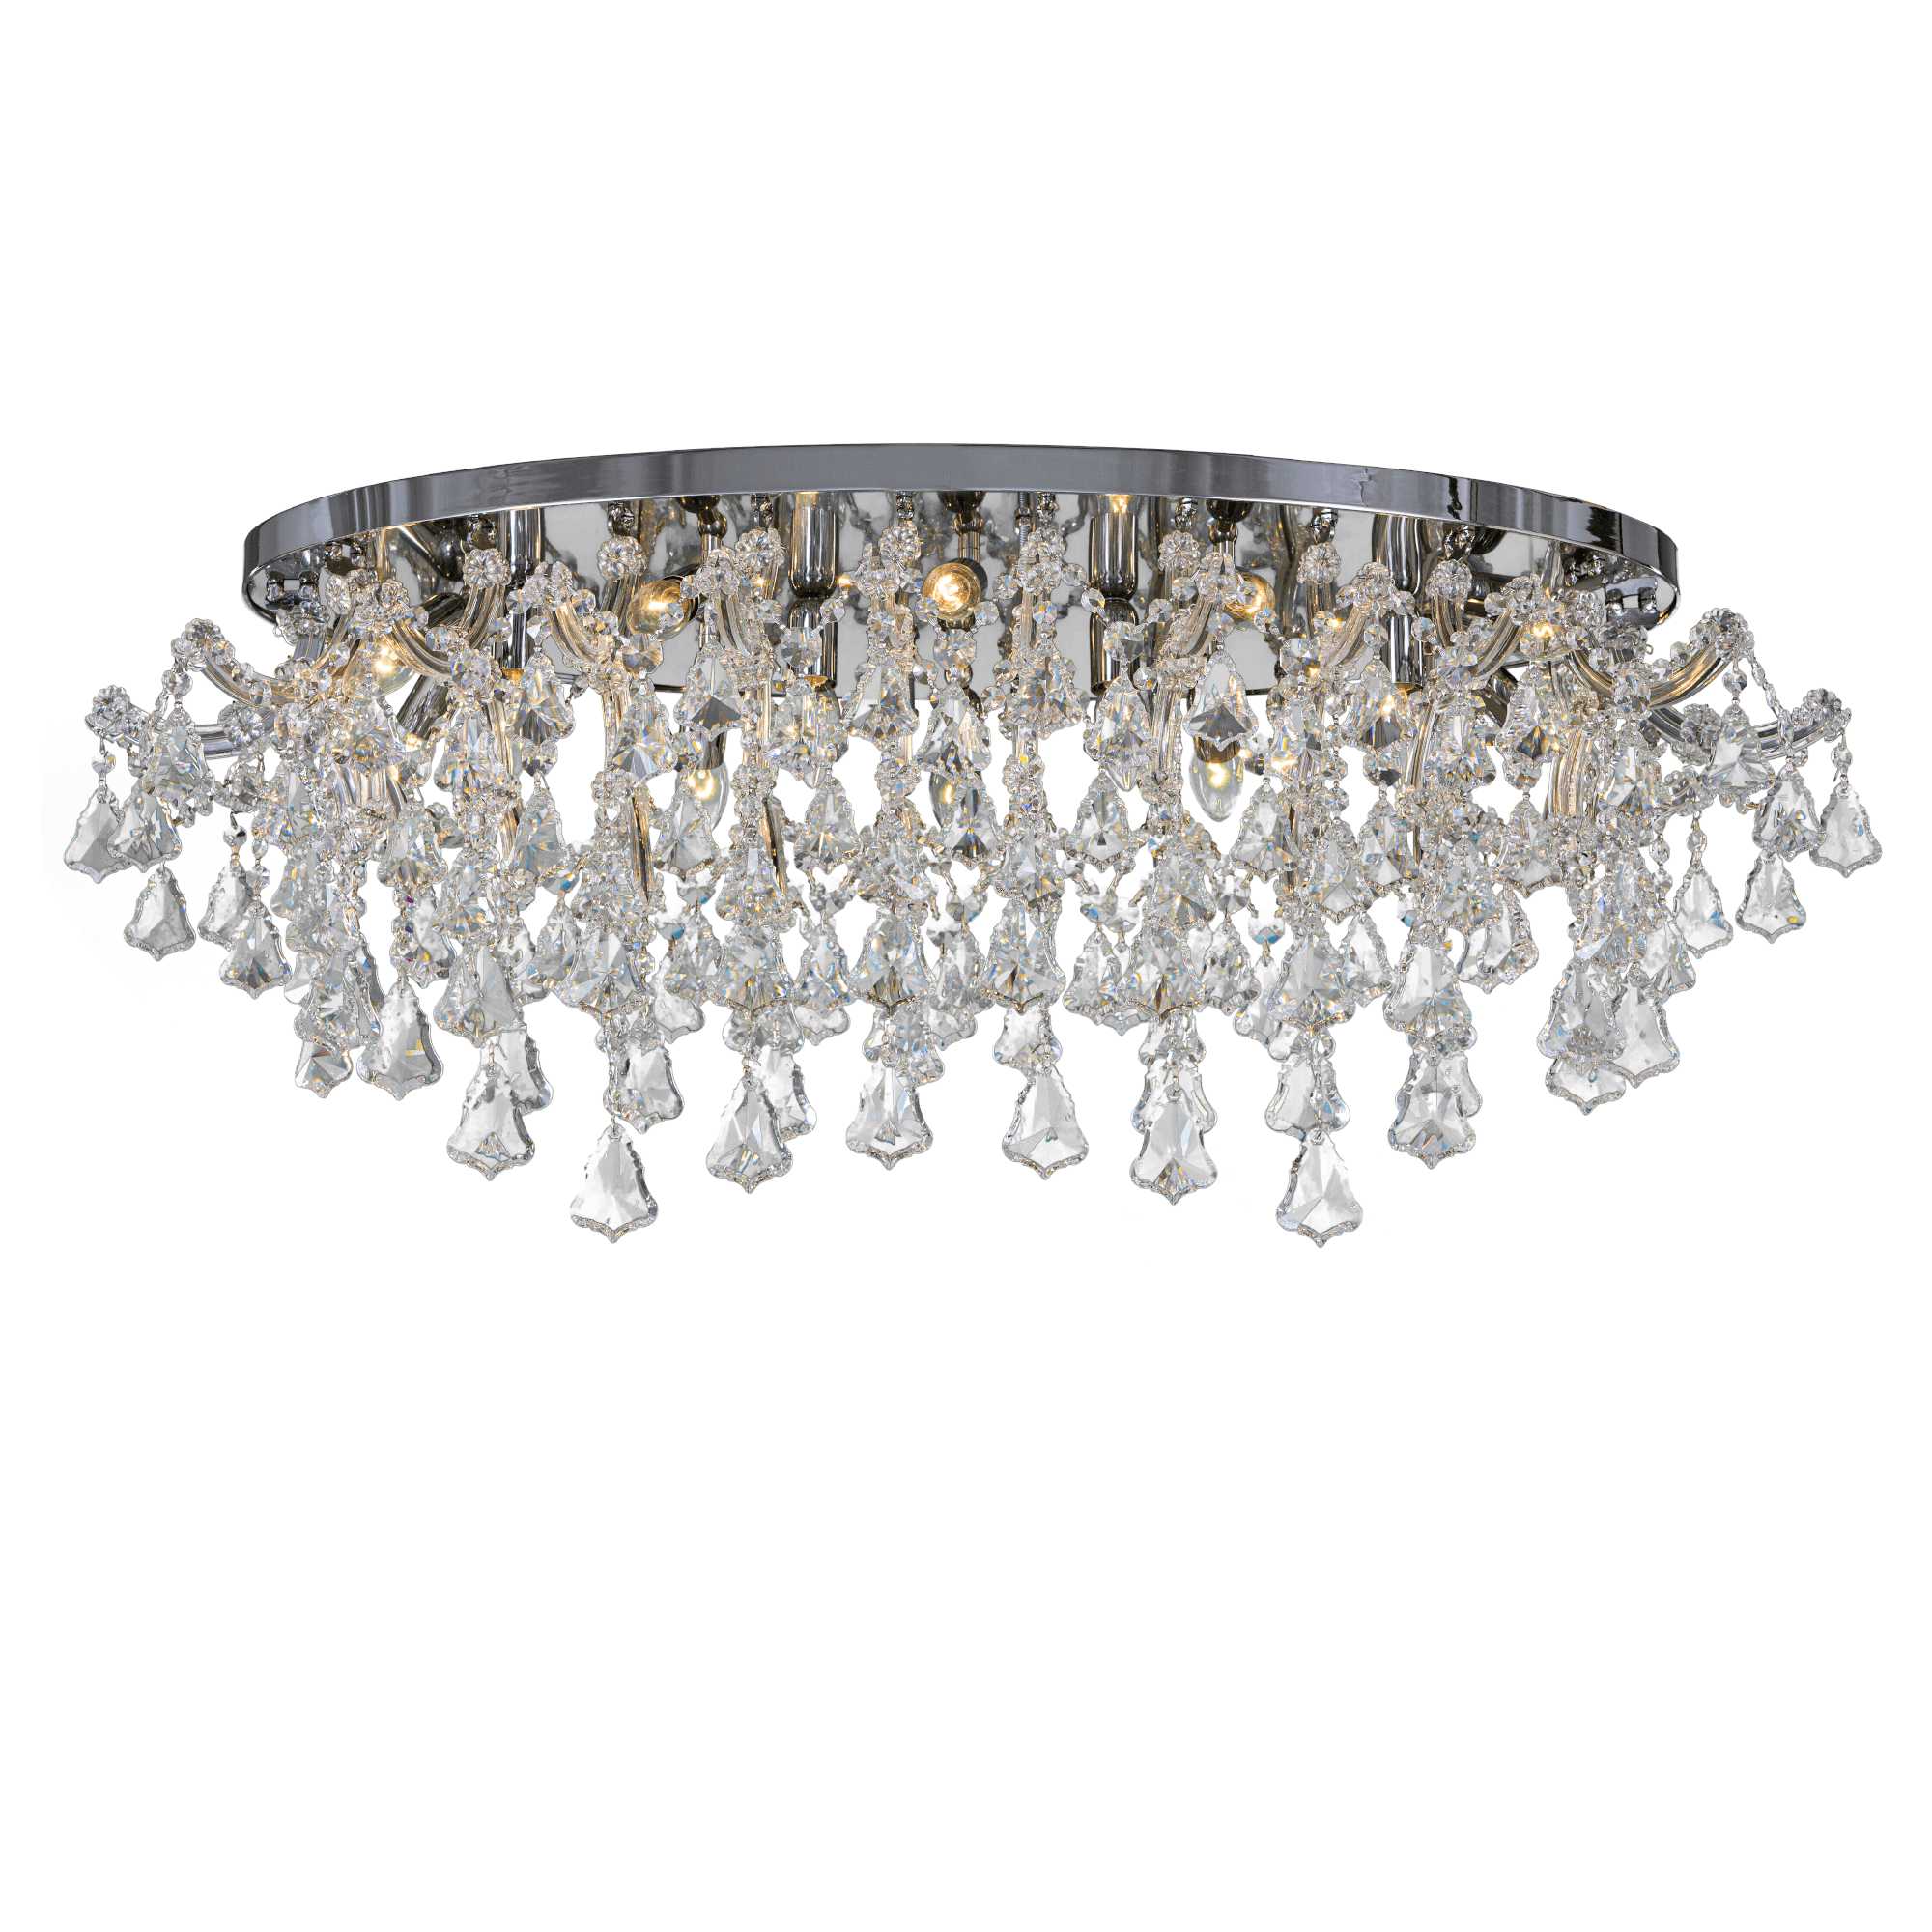 Asfour-Crystal-Lighting-Maria-Theresa-Collection-Maria-Theresa-Ceiling-lamp-14-Bulbs-Chrome